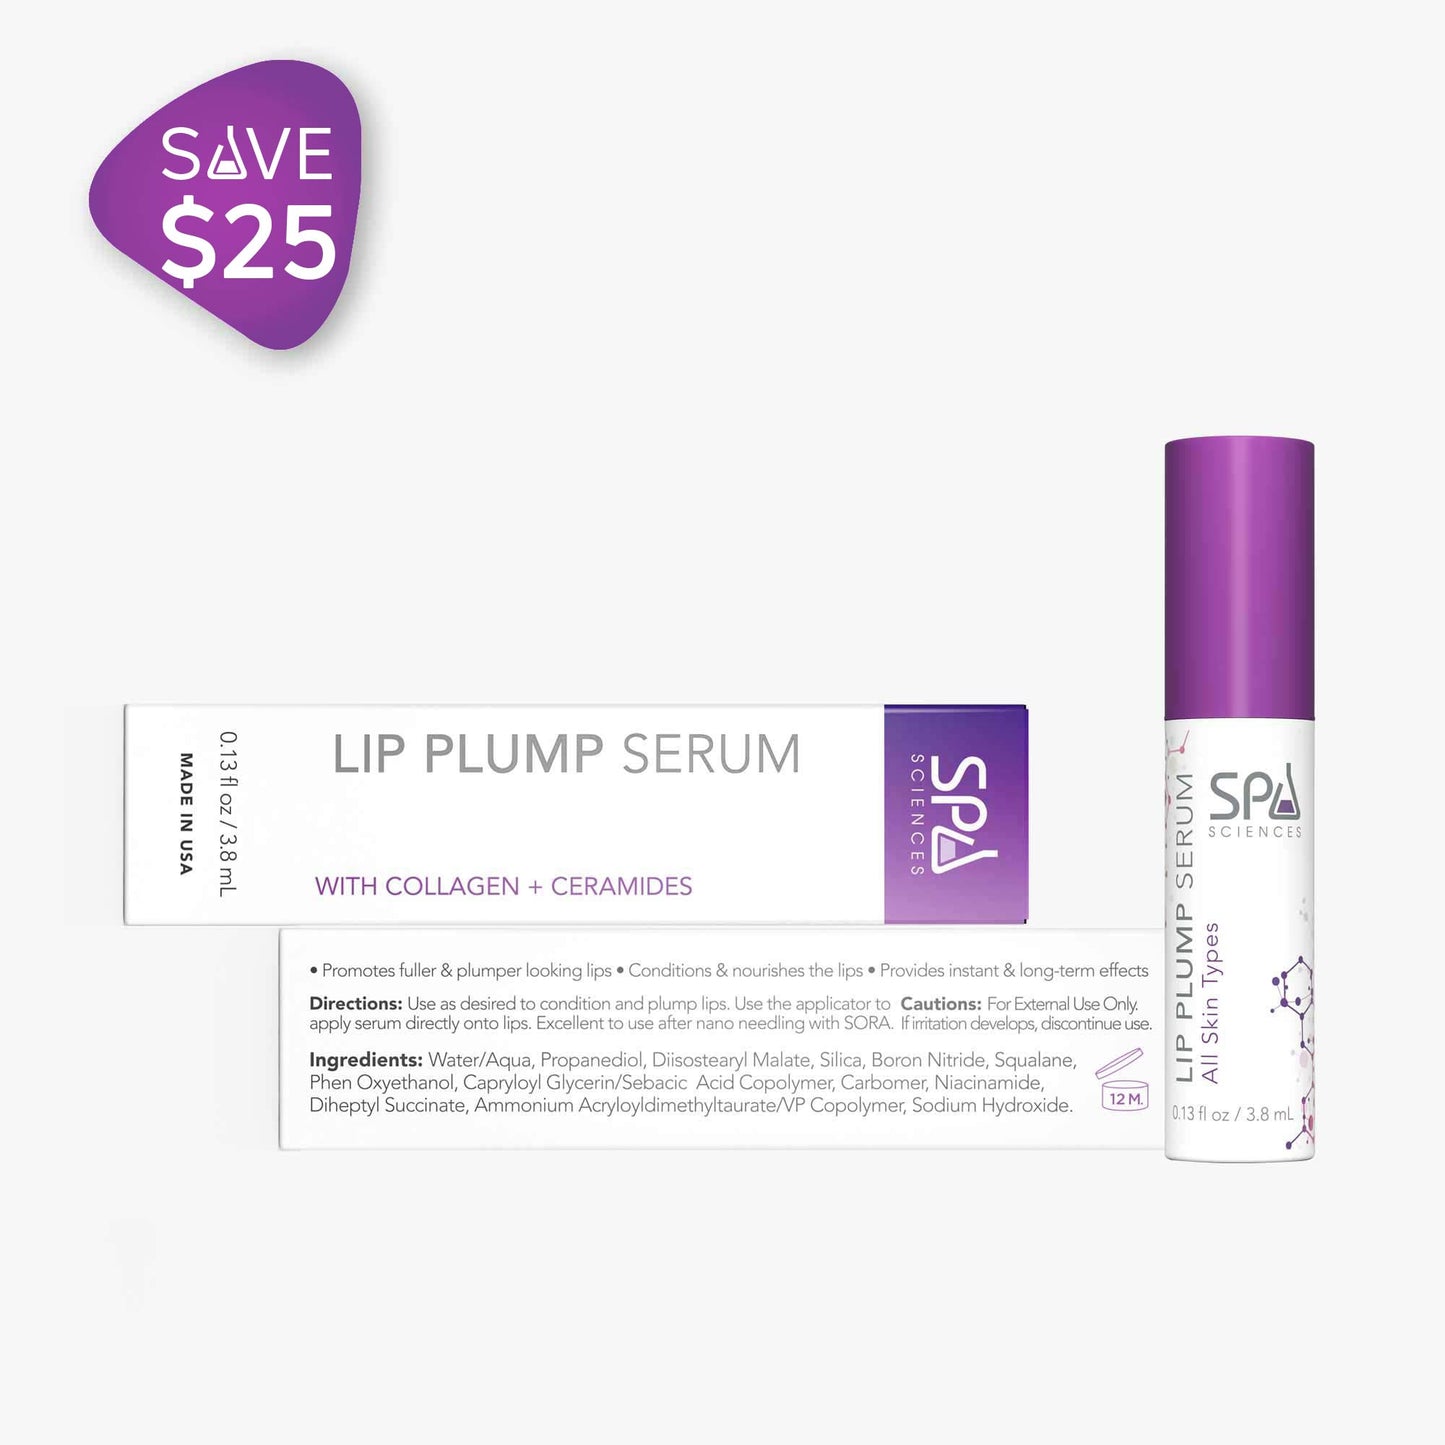 Plump It Lip plump serum by Spa Sciences.